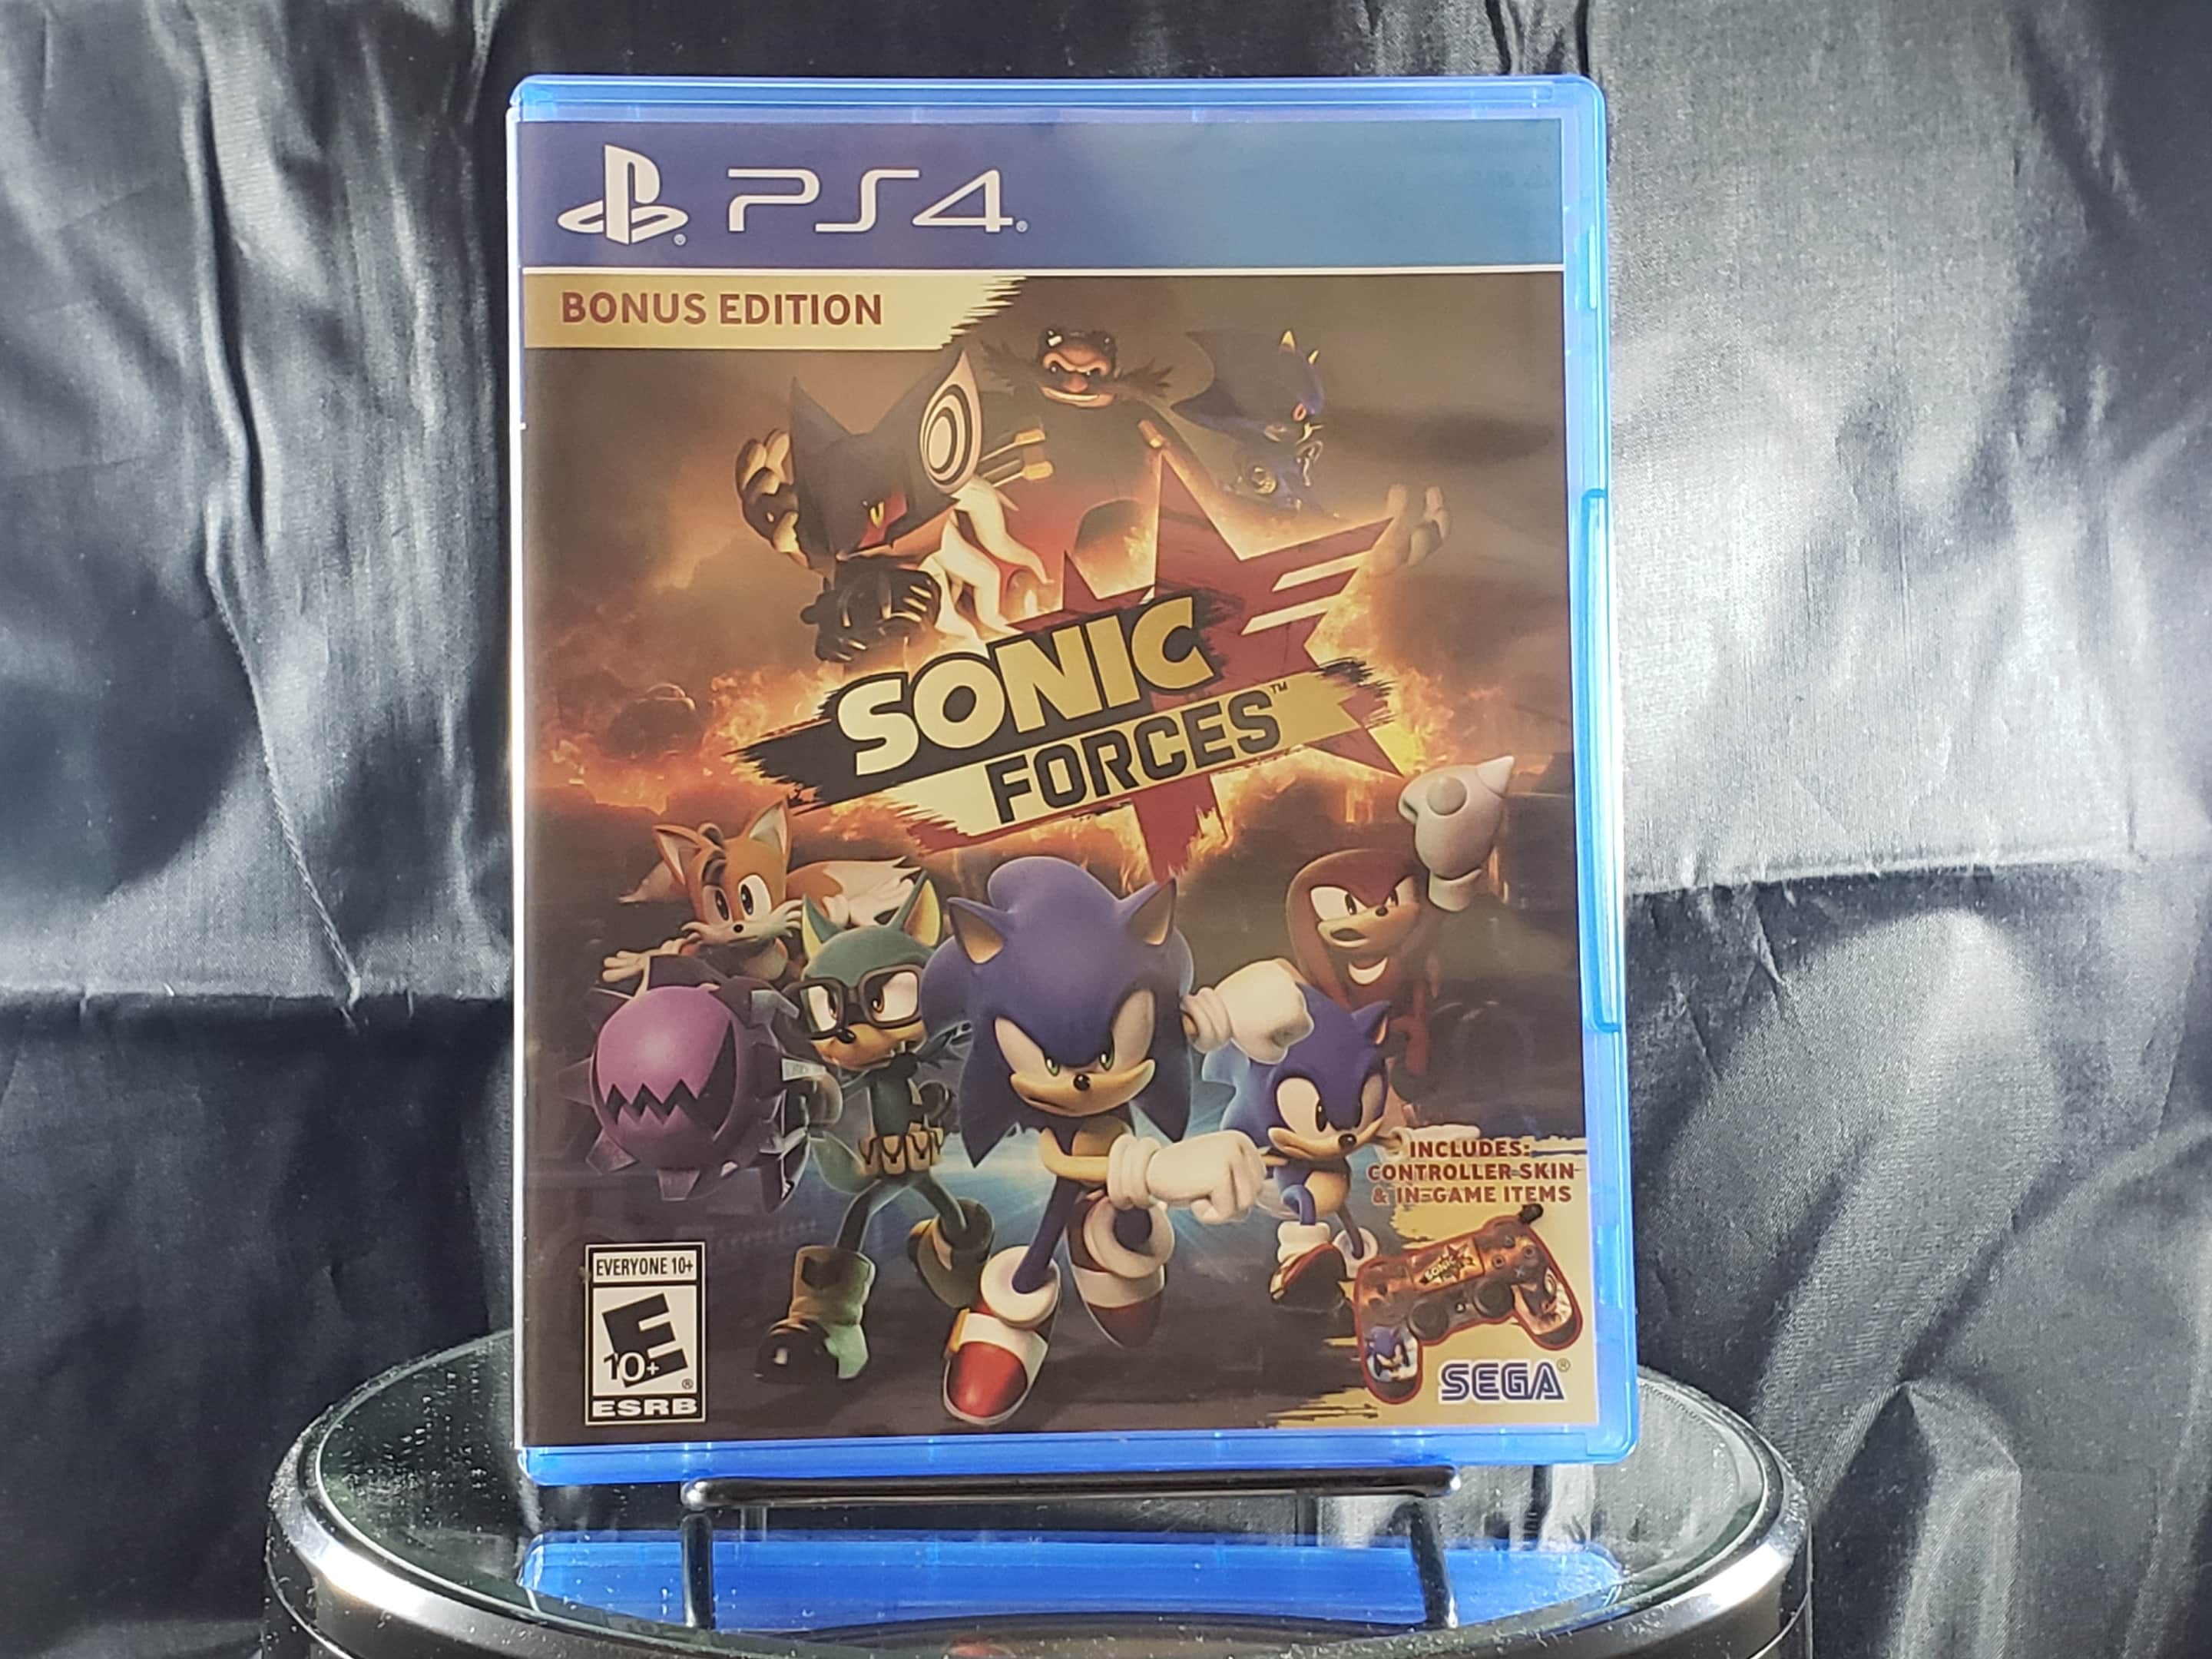 Sonic Forces Bonus Edition - PlayStation 4 